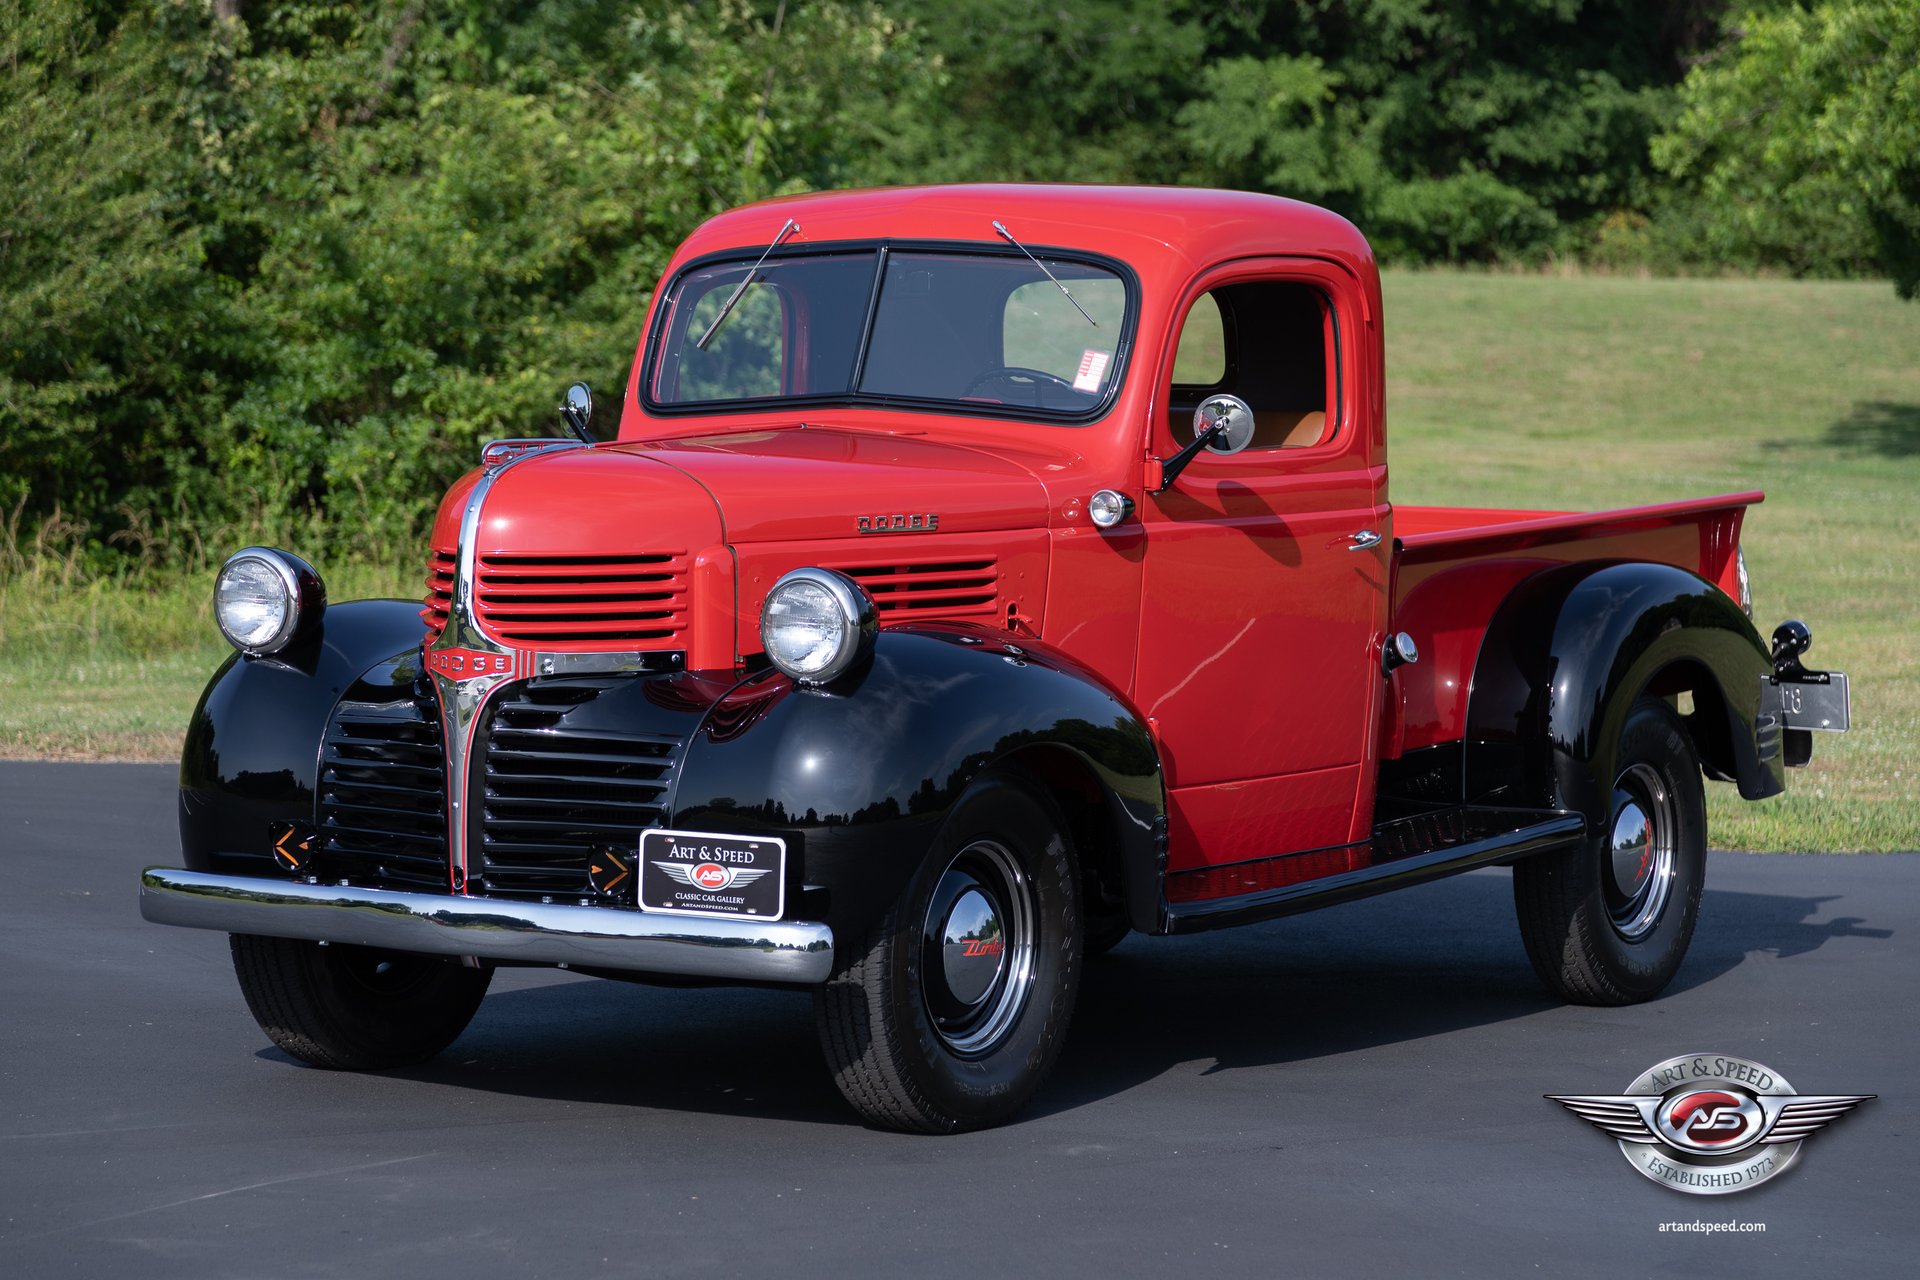 1946 Dodge 1/2-Ton Pickup  Art & Speed Classic Car Gallery in Memphis, TN